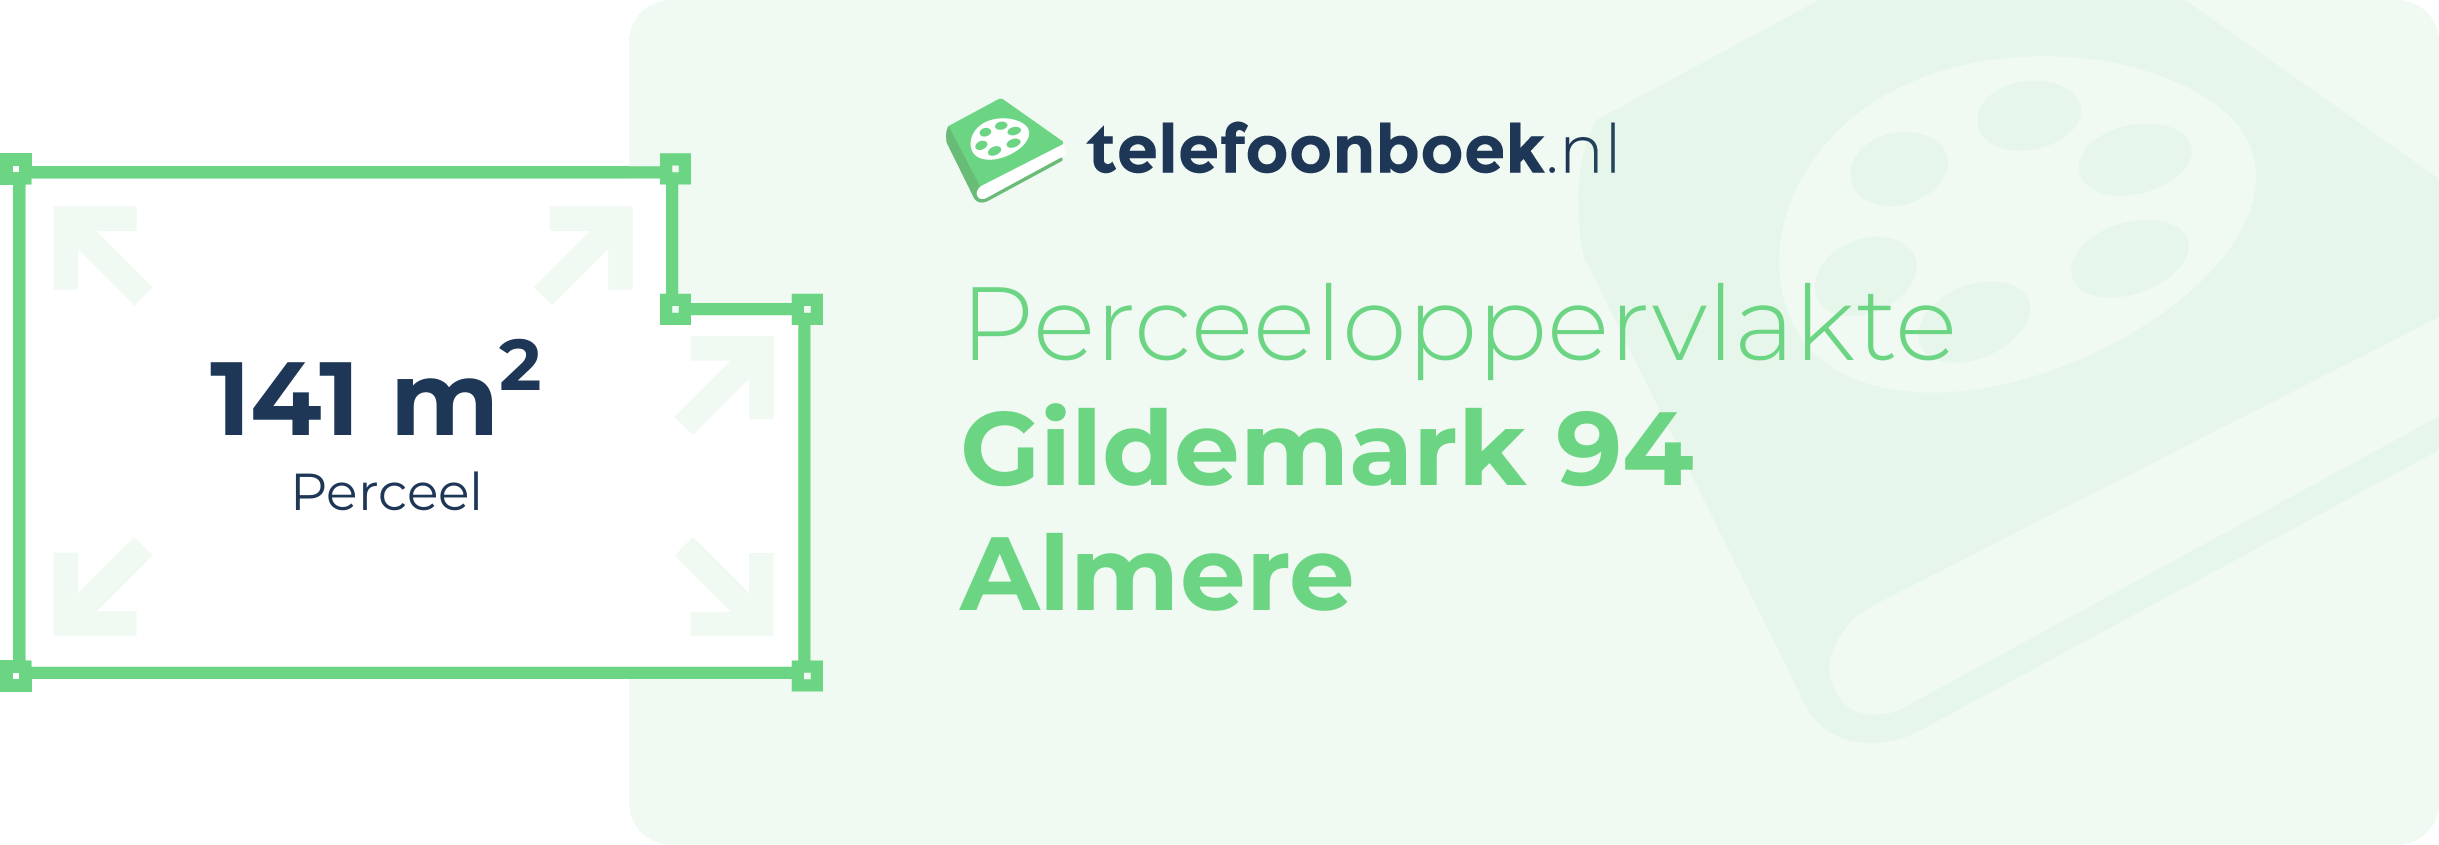 Perceeloppervlakte Gildemark 94 Almere